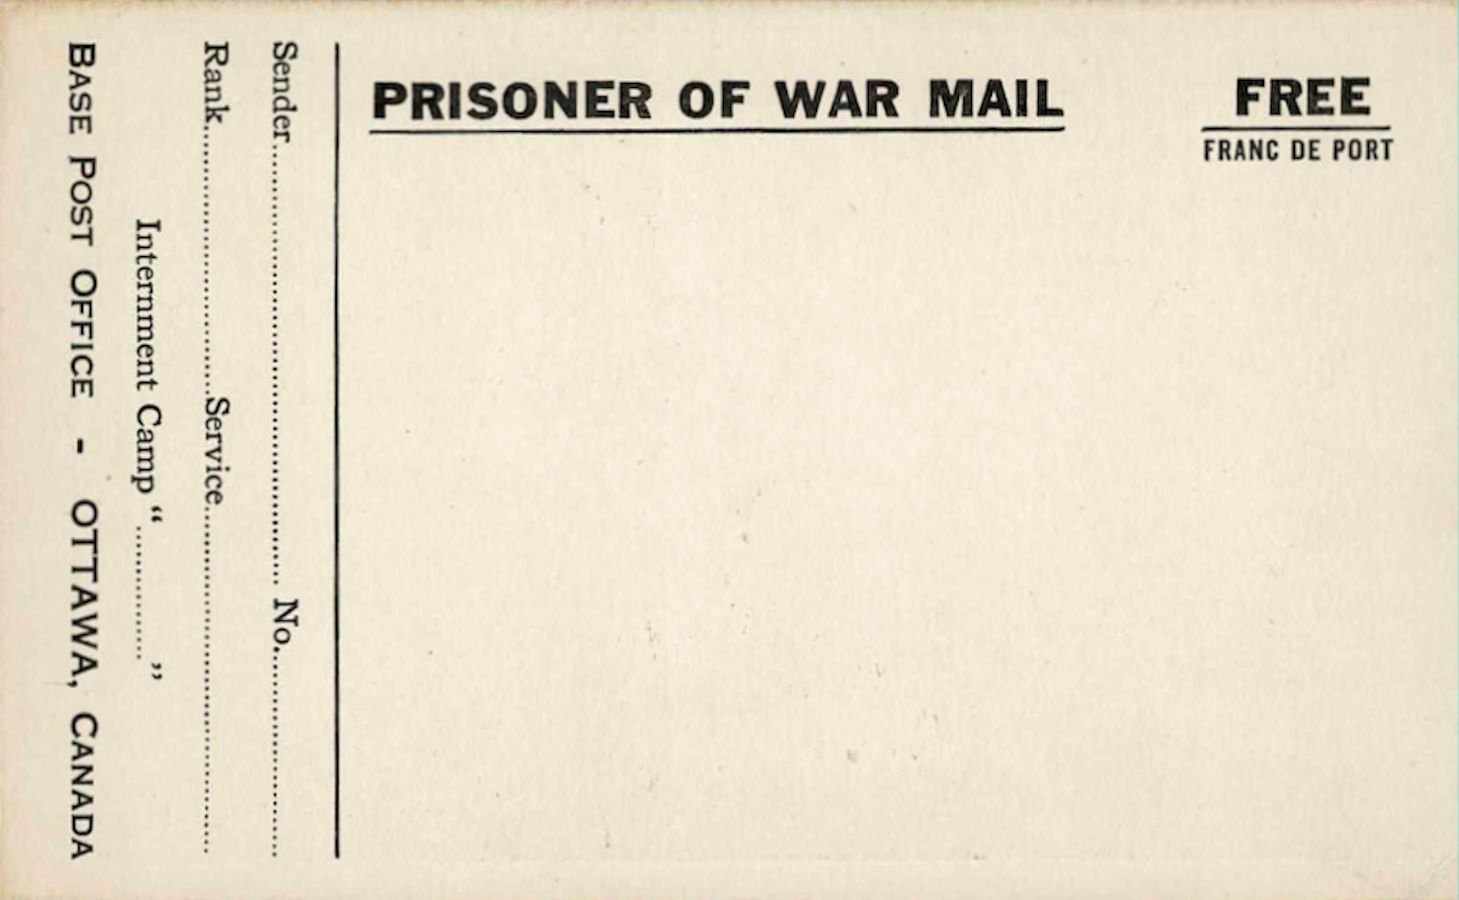 
19??;Canada;The World’s Committee, YMCA ; WW II-Era Christmas POW Card